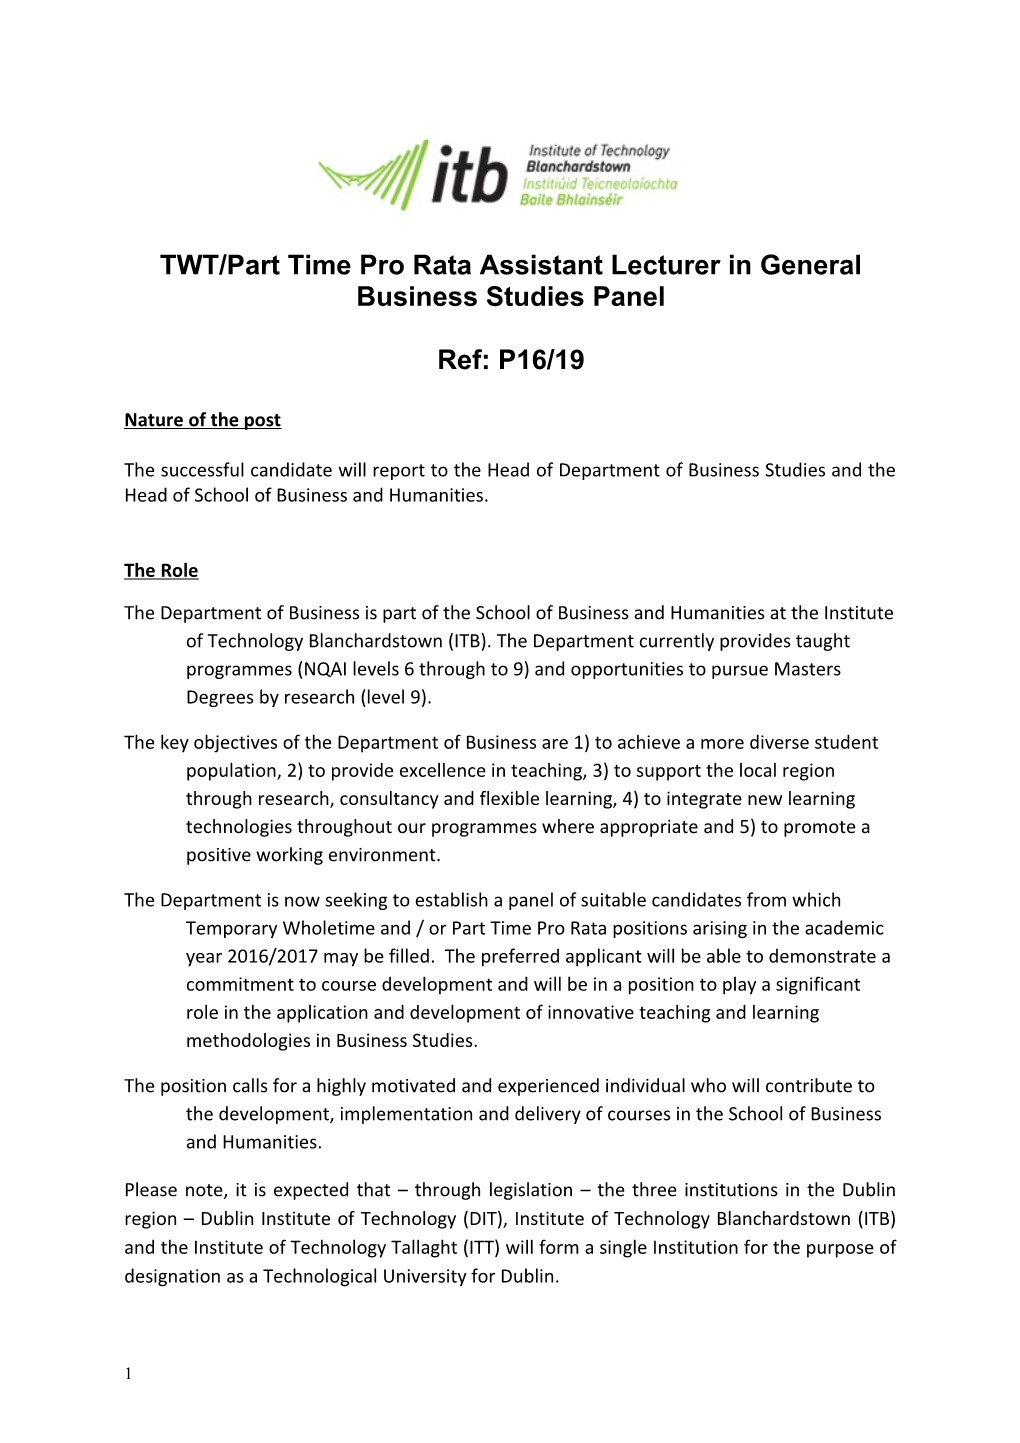 TWT/Part Time Pro Rata Assistant Lecturer in General Business Studies Panel